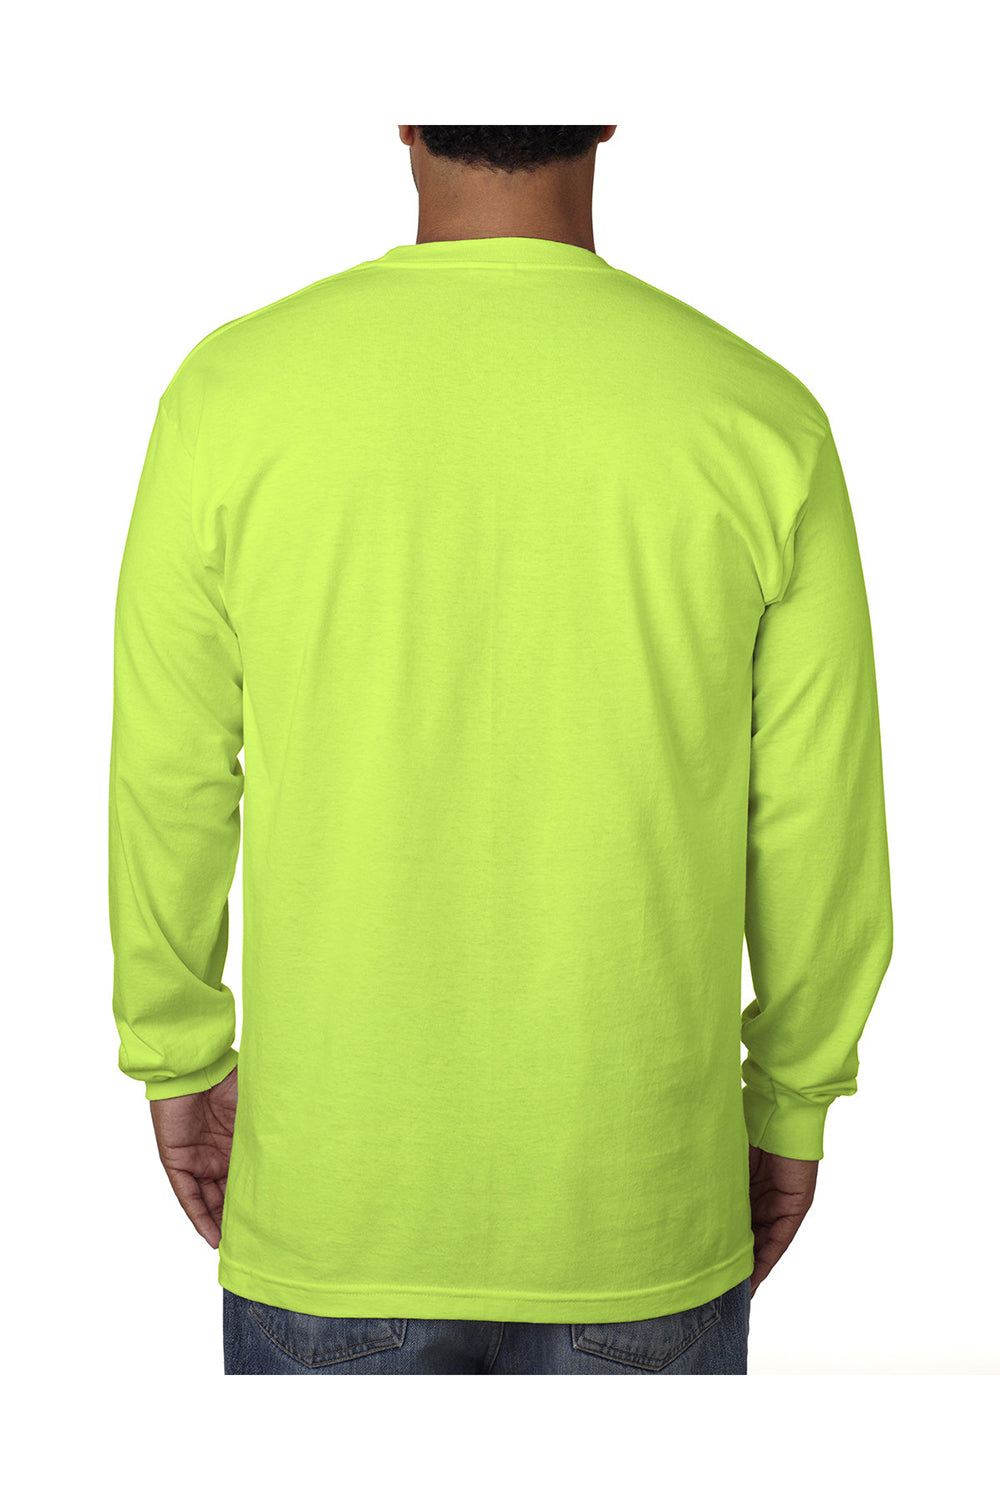 Bayside BA5060 Mens USA Made Long Sleeve Crewneck T-Shirt Lime Green Model Back